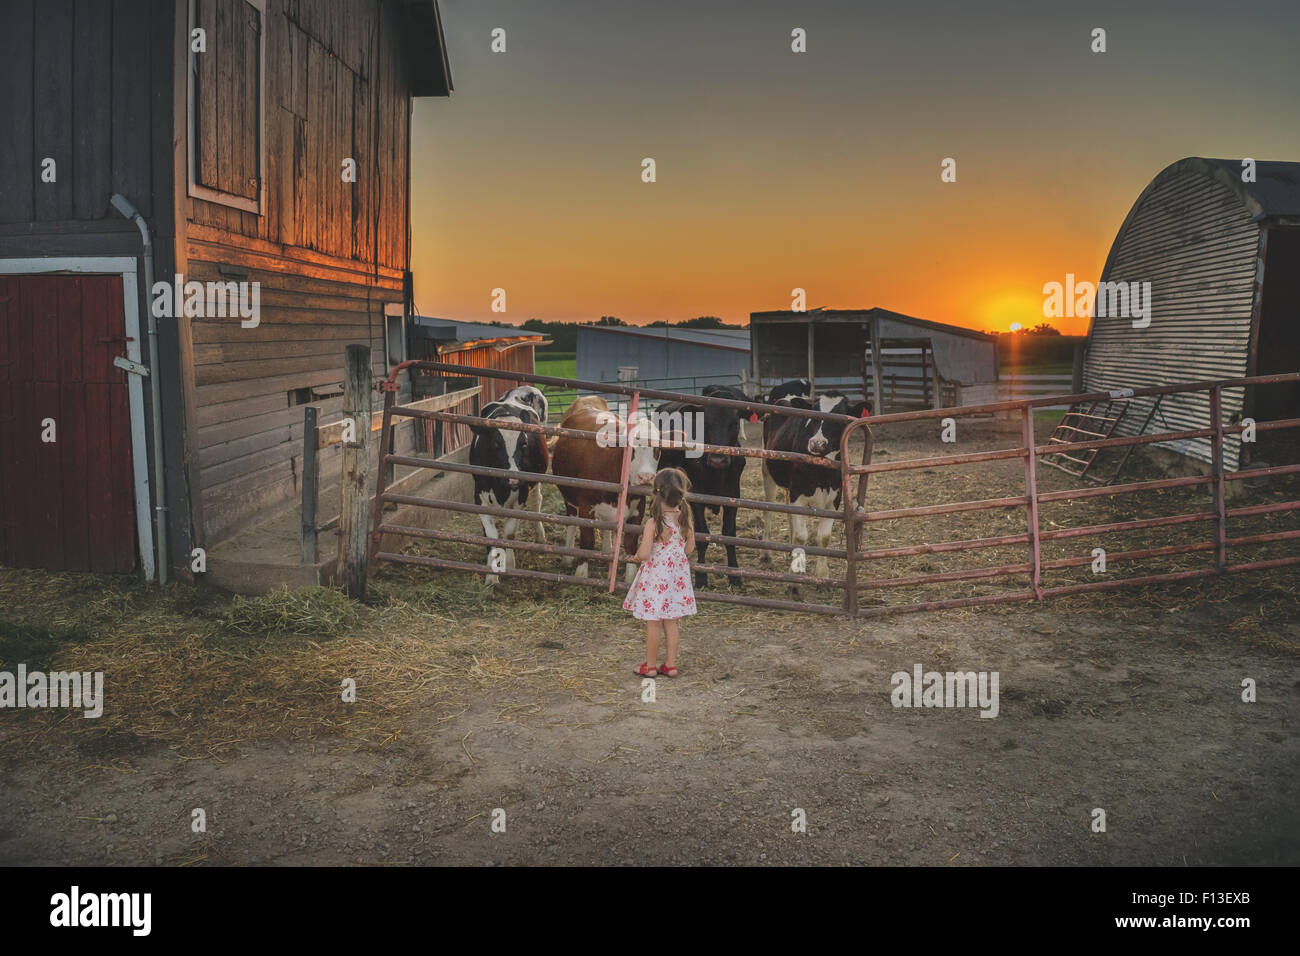 Girl standing in front of a pen avec quatre vaches Banque D'Images